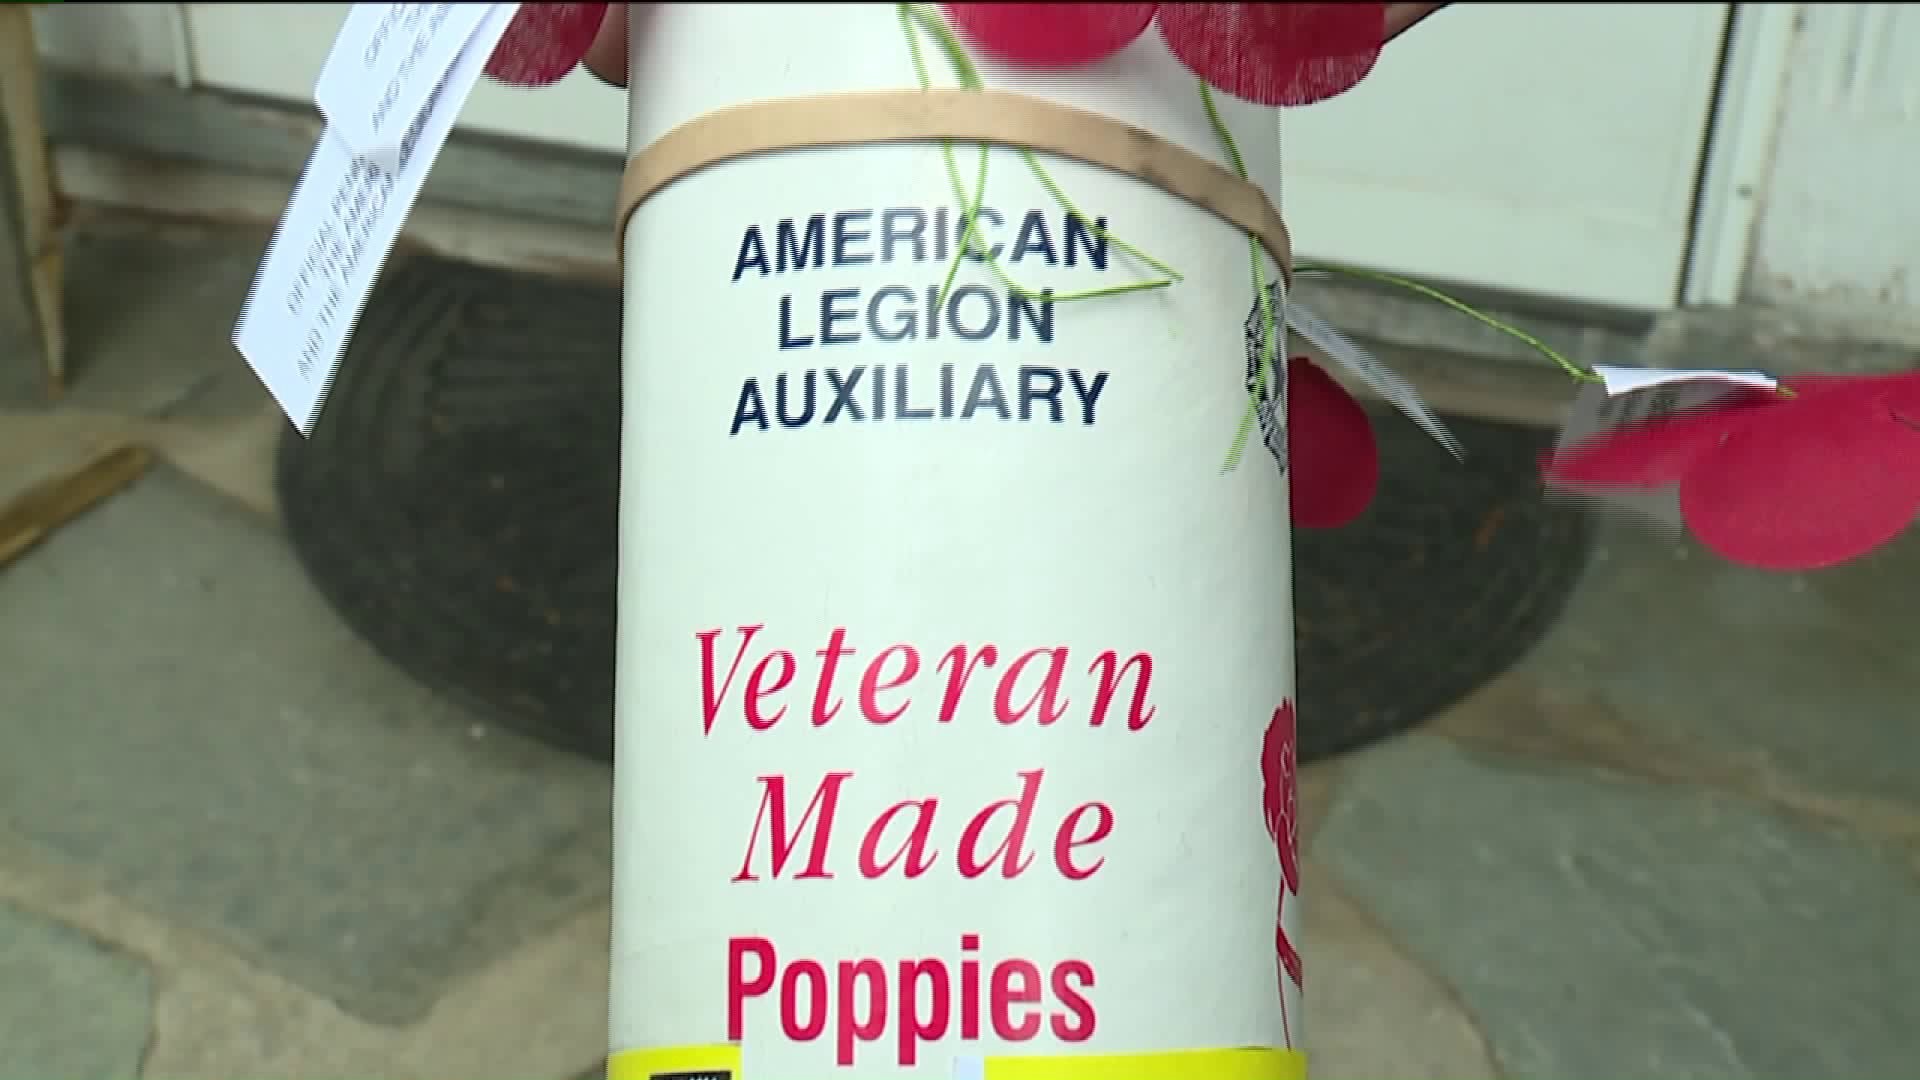 Veterans' Jar Stolen in Poconos